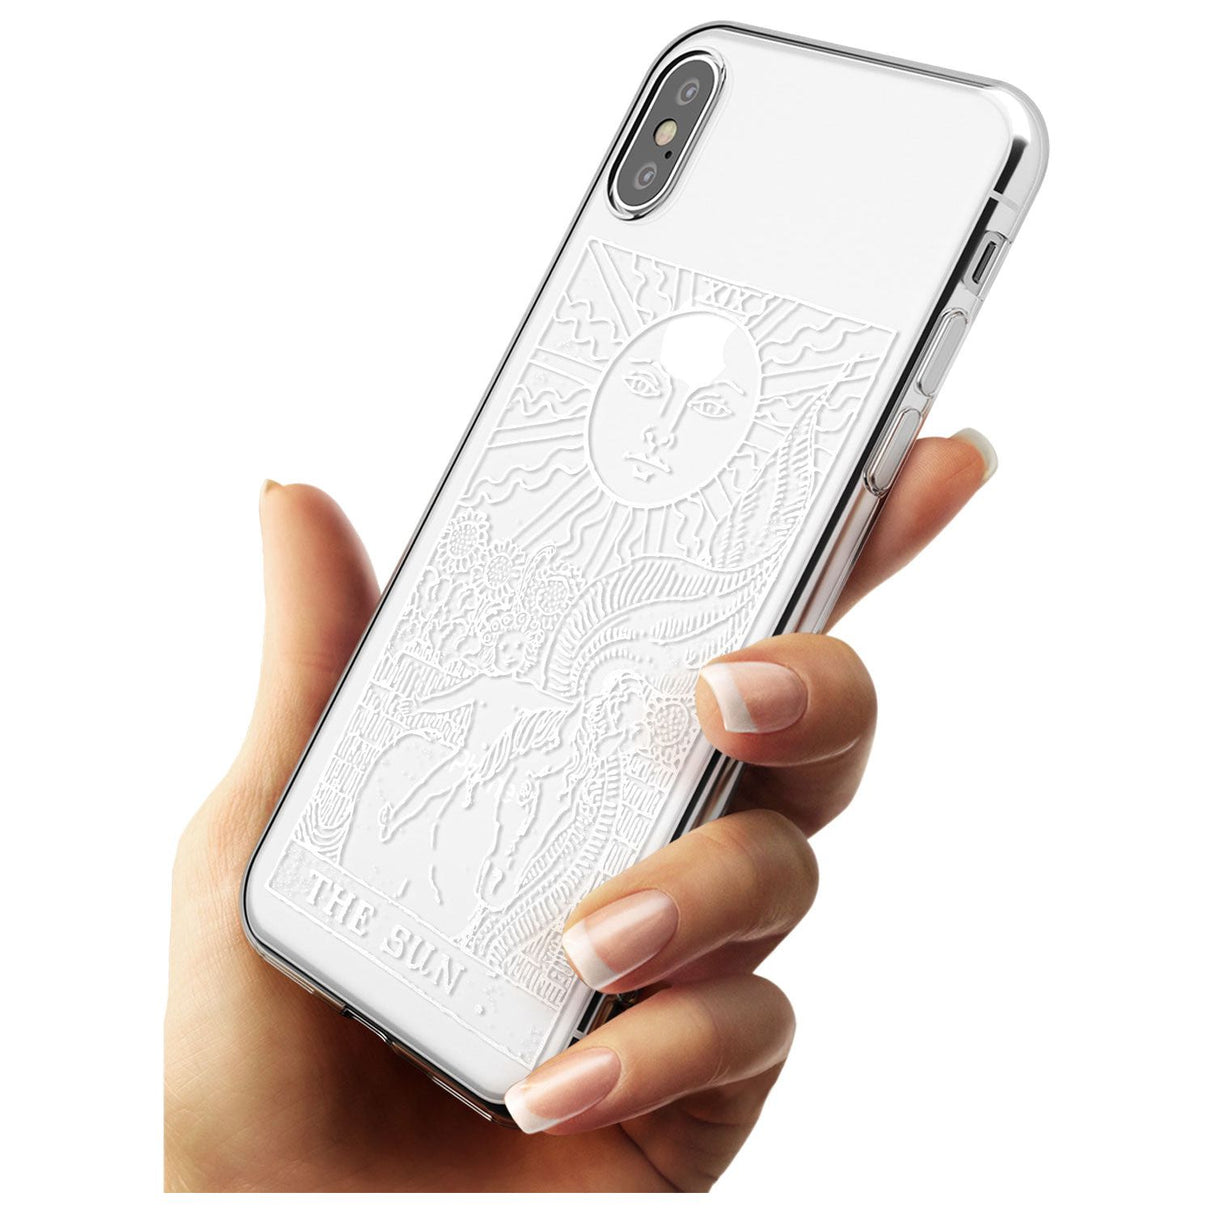 The Sun Tarot Card - White Transparent Black Impact Phone Case for iPhone X XS Max XR